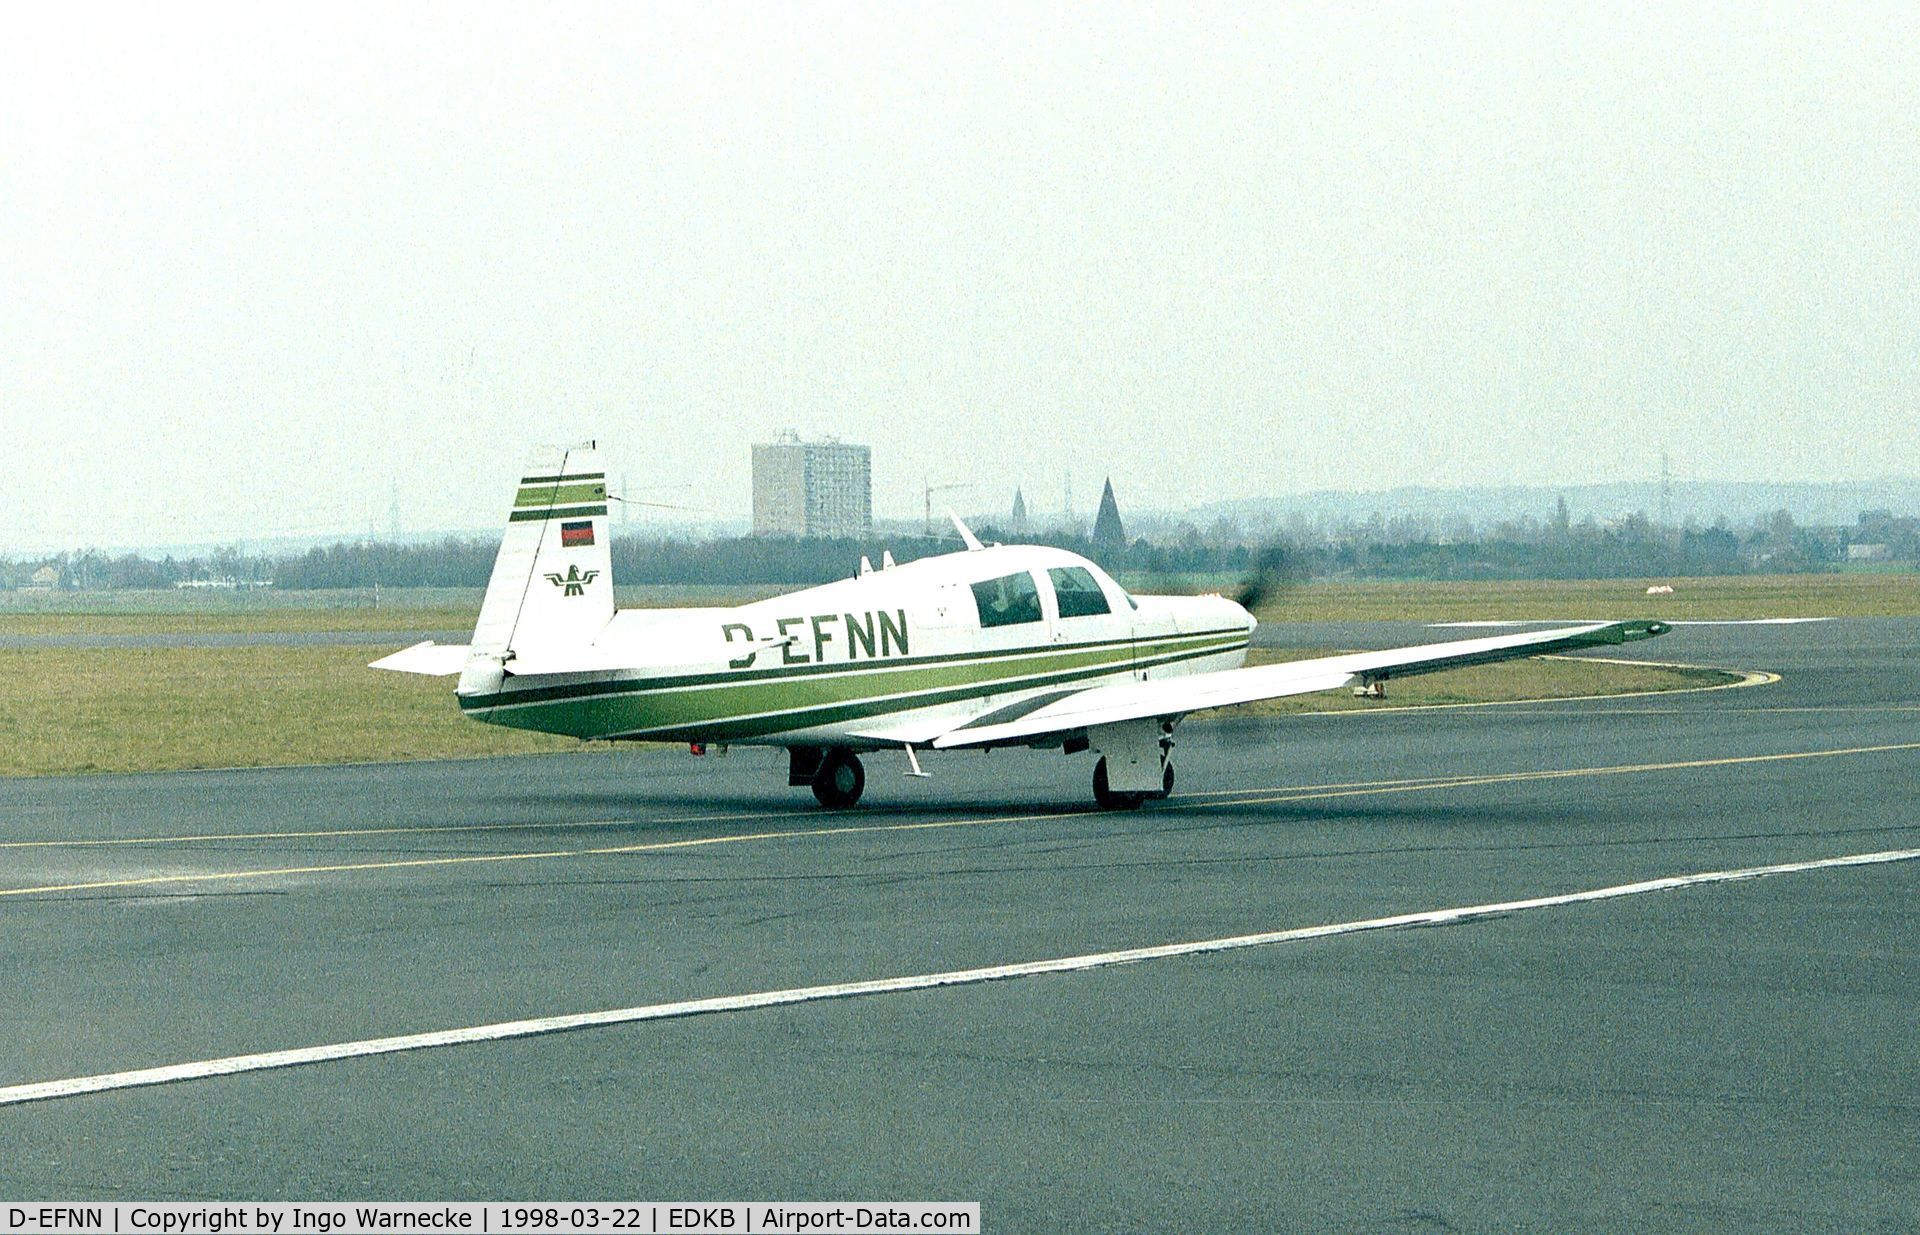 D-EFNN, 1974 Mooney M20E Chaparral C/N 21-1178, Mooney M20E Aerostar 201 at Bonn-Hangelar airfield